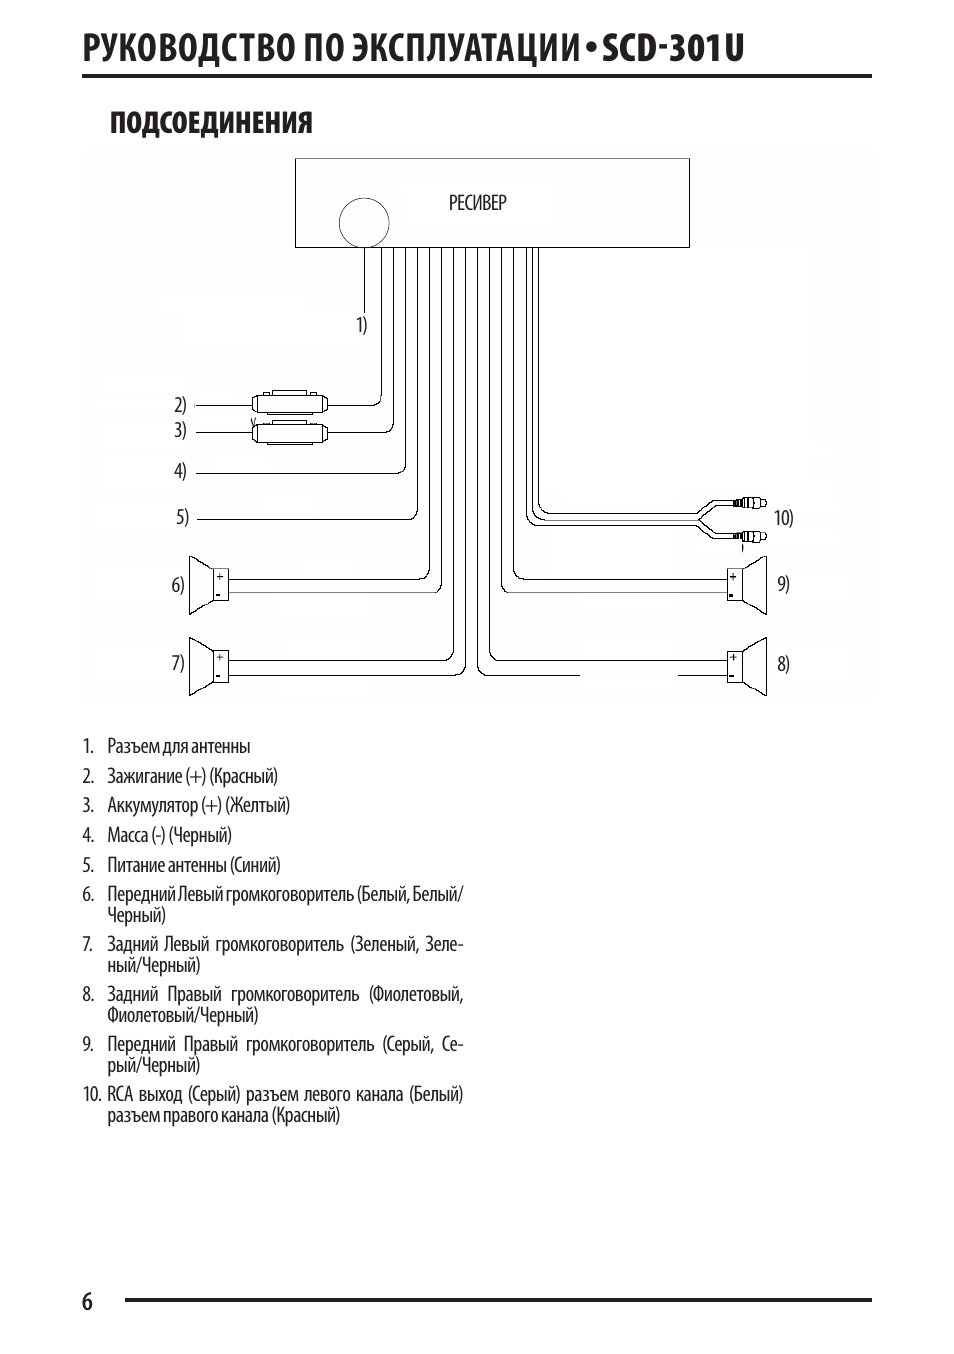 Автомагнитола супра инструкция по настройке sfd 1011dcu